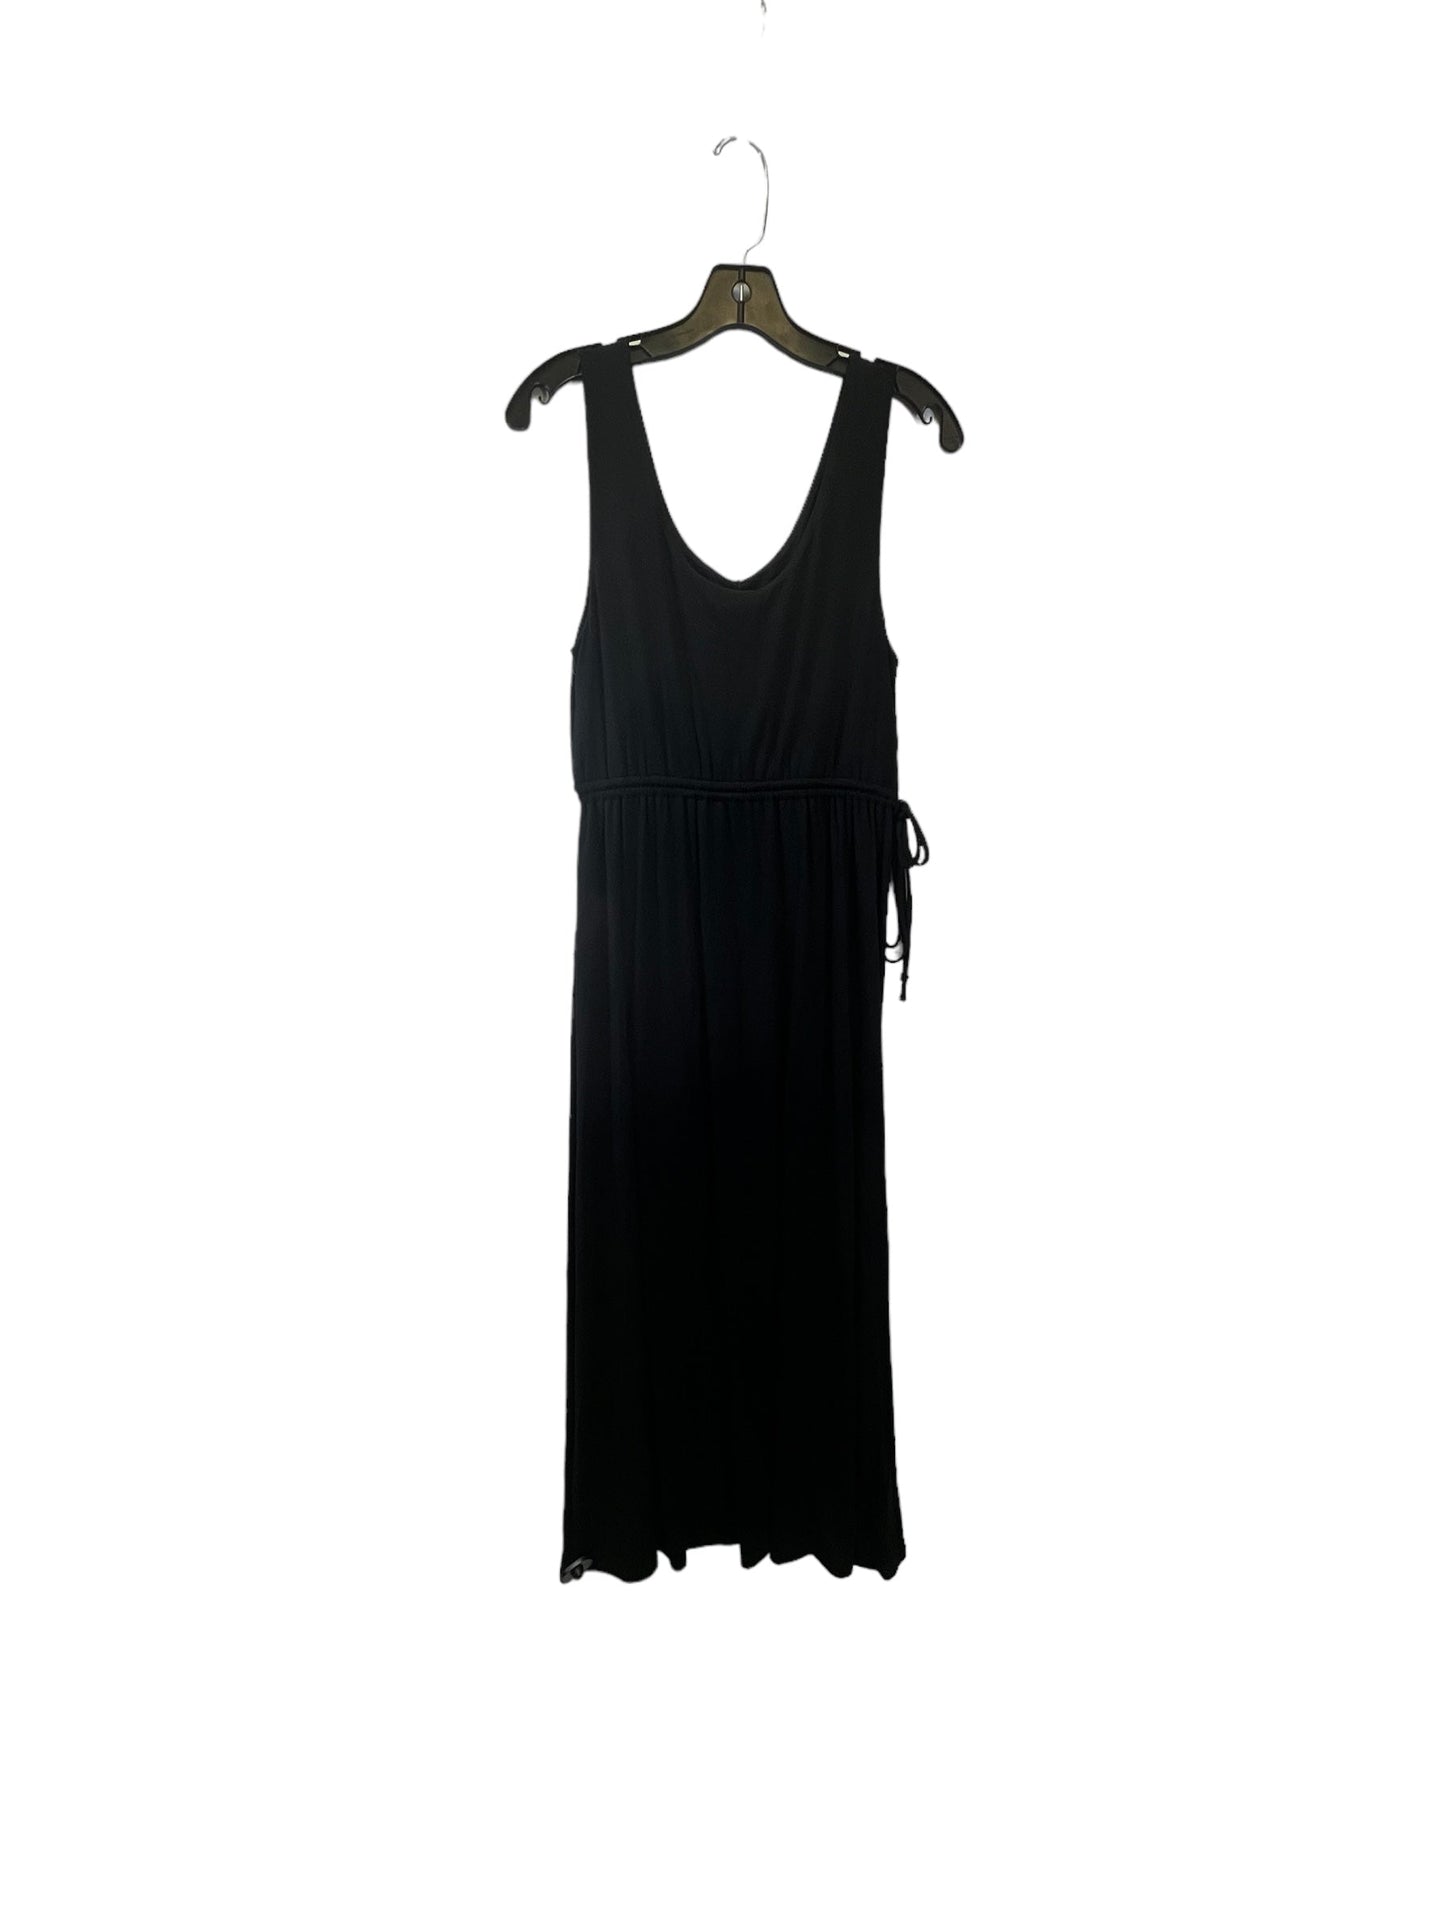 Black Dress Casual Maxi Adrienne Vittadini, Size M